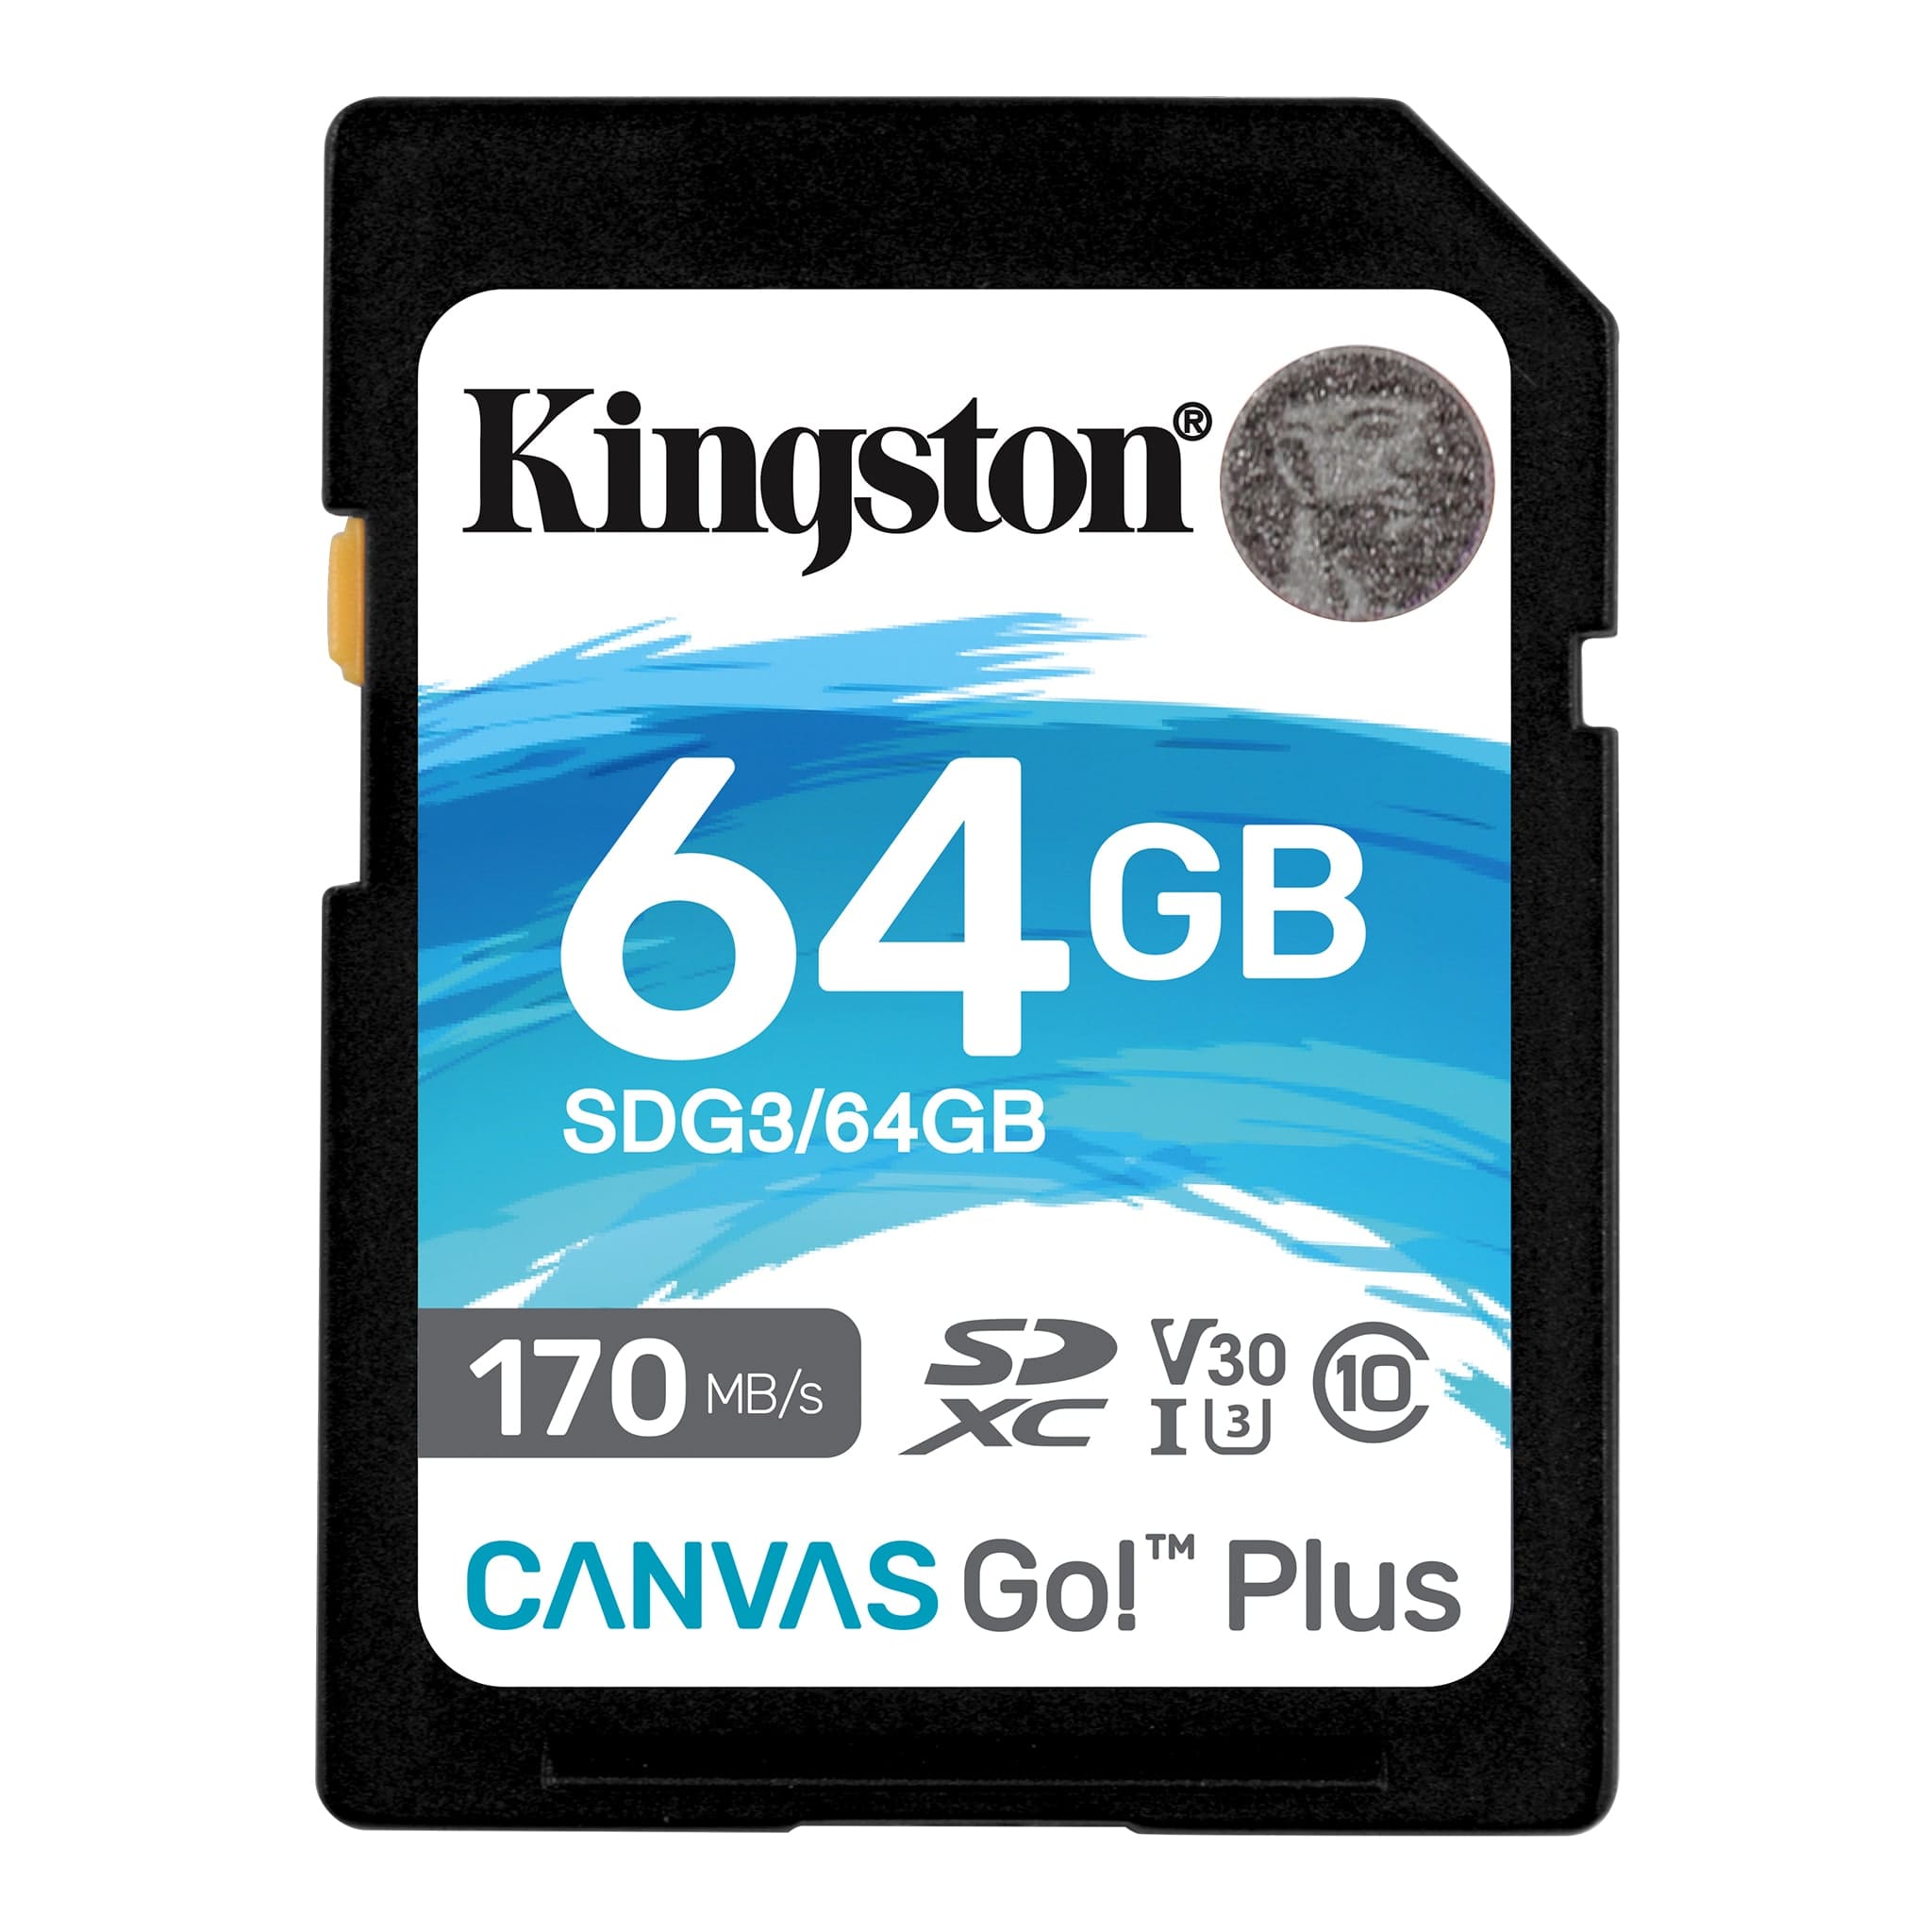 Obrázek Kingston Canvas Go Plus/SDXC/64GB/170MBps/UHS-I U3 / Class 10